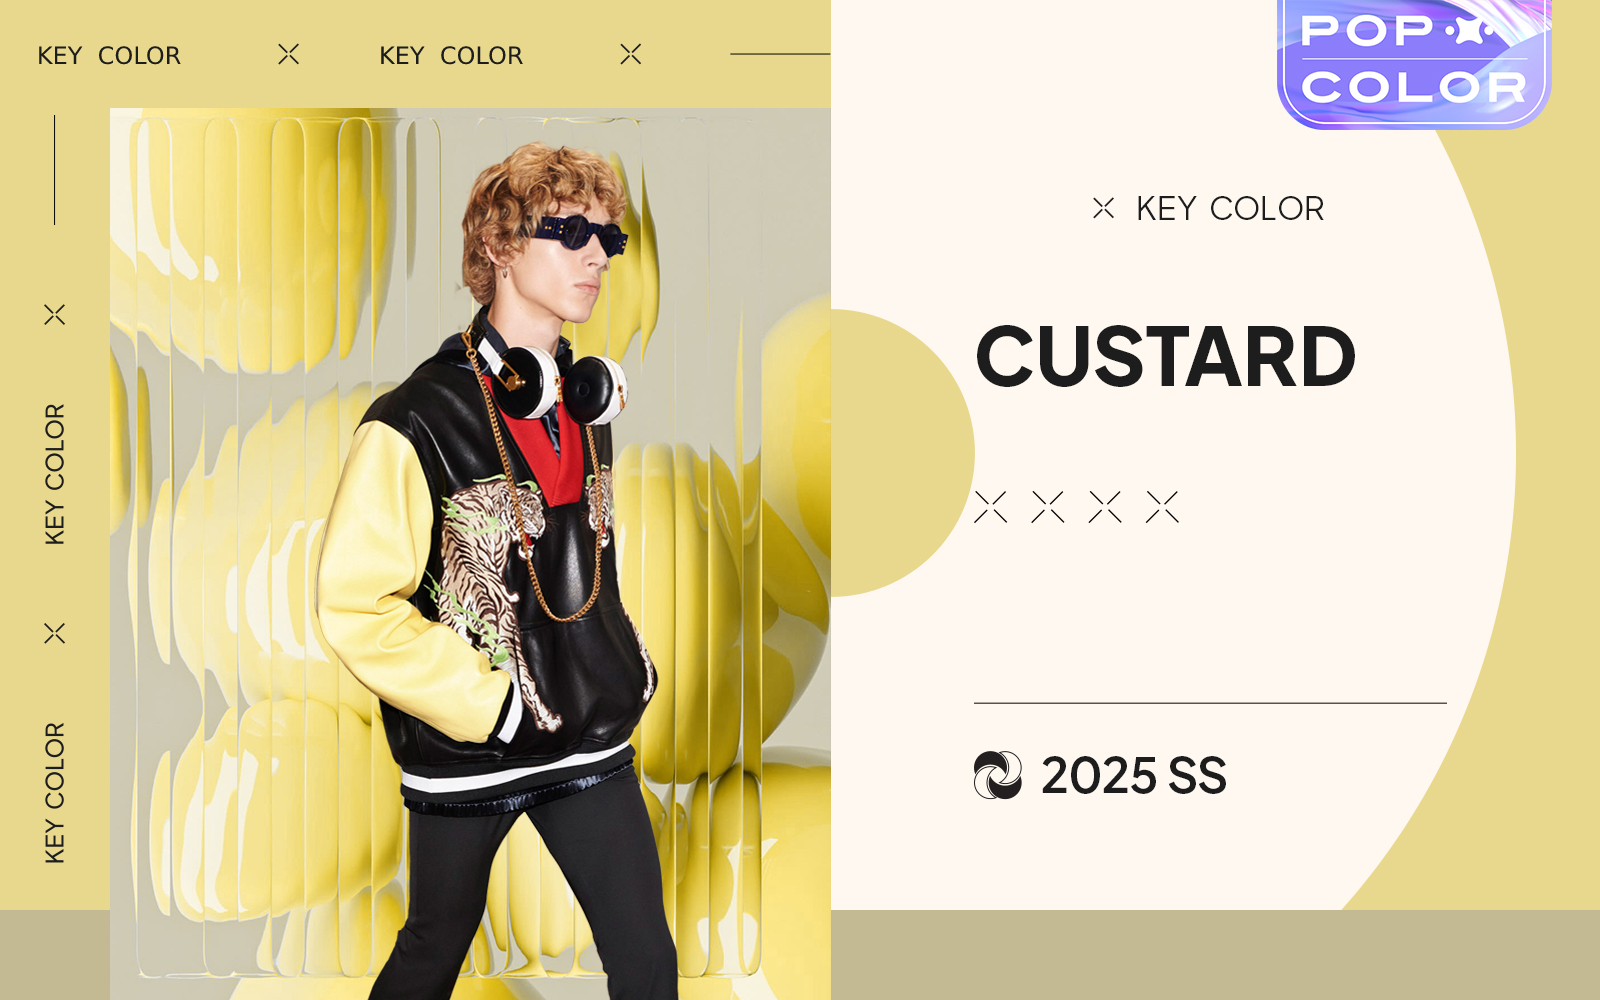 Custard -- The Color Trend for Menswear